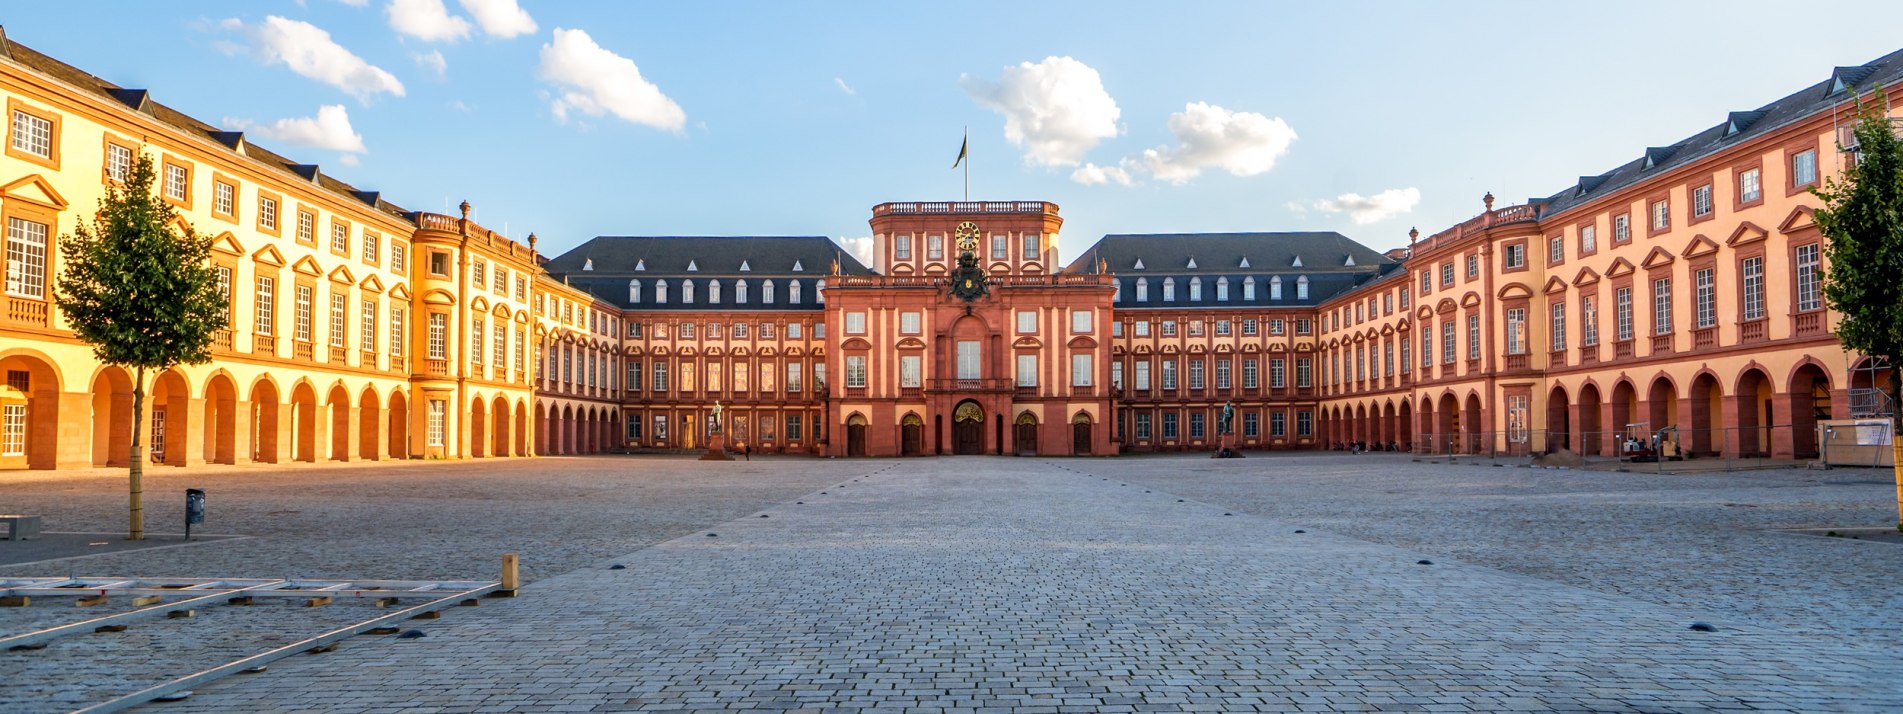 Das Mannheimer Barockschloss mit menschenleerem Hof - BAHNHIT.DE, © getty, Foto: Sina Ettmer / EyeEm